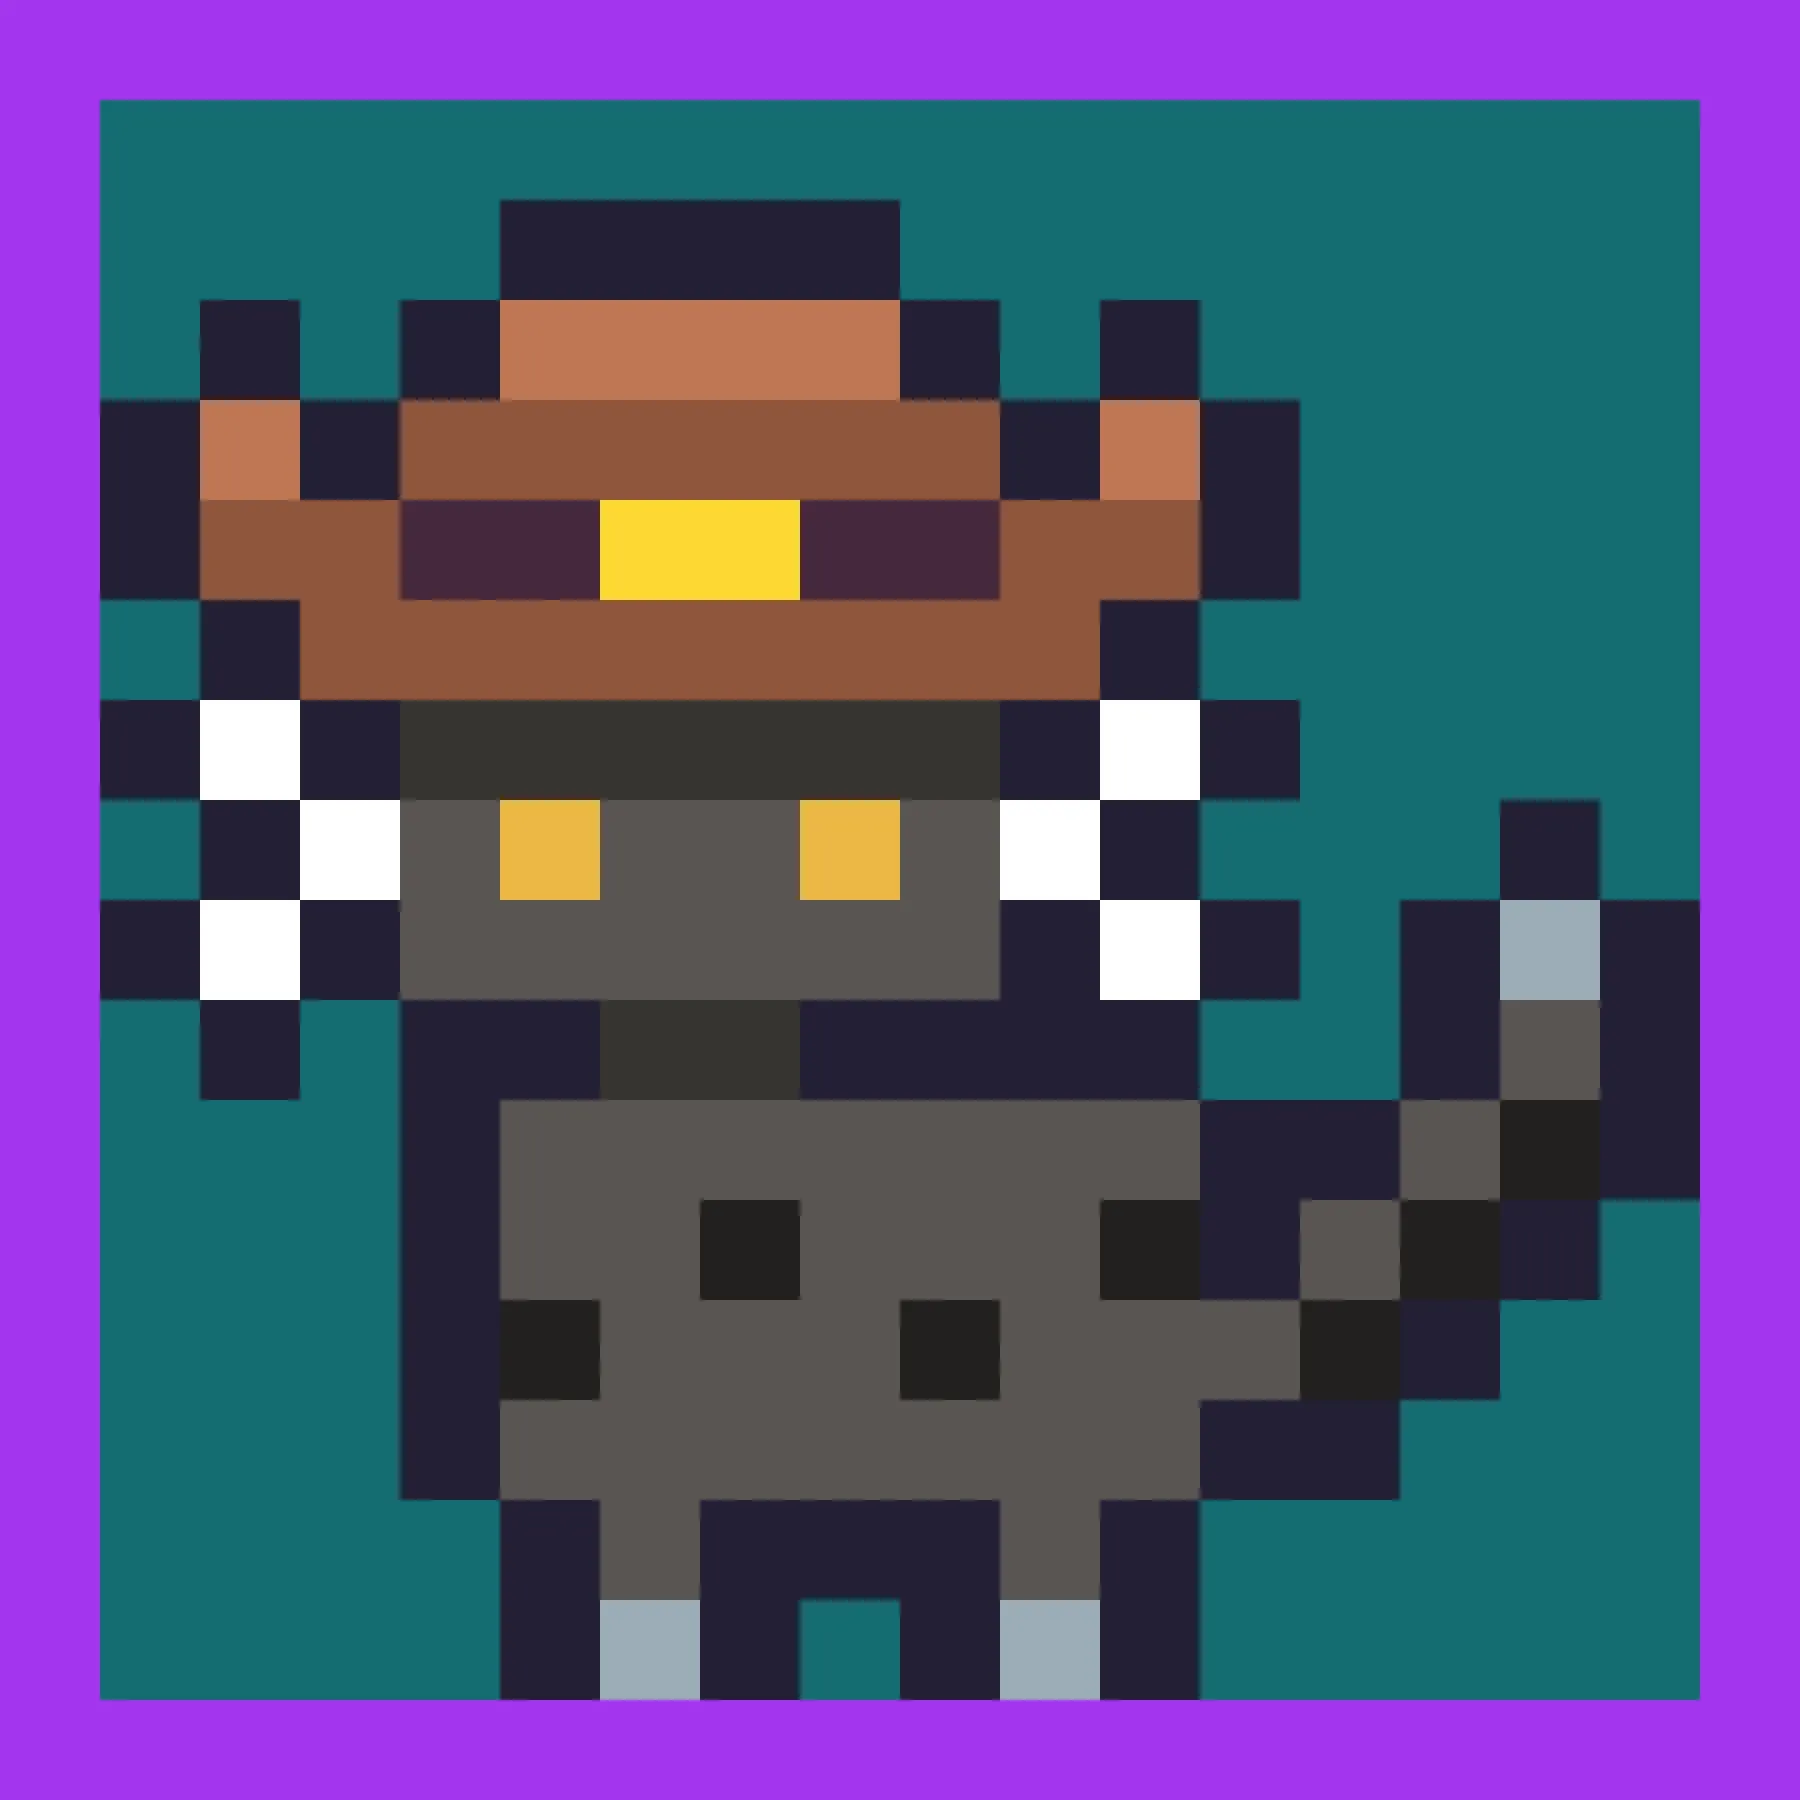 BitCat Cowboy #2